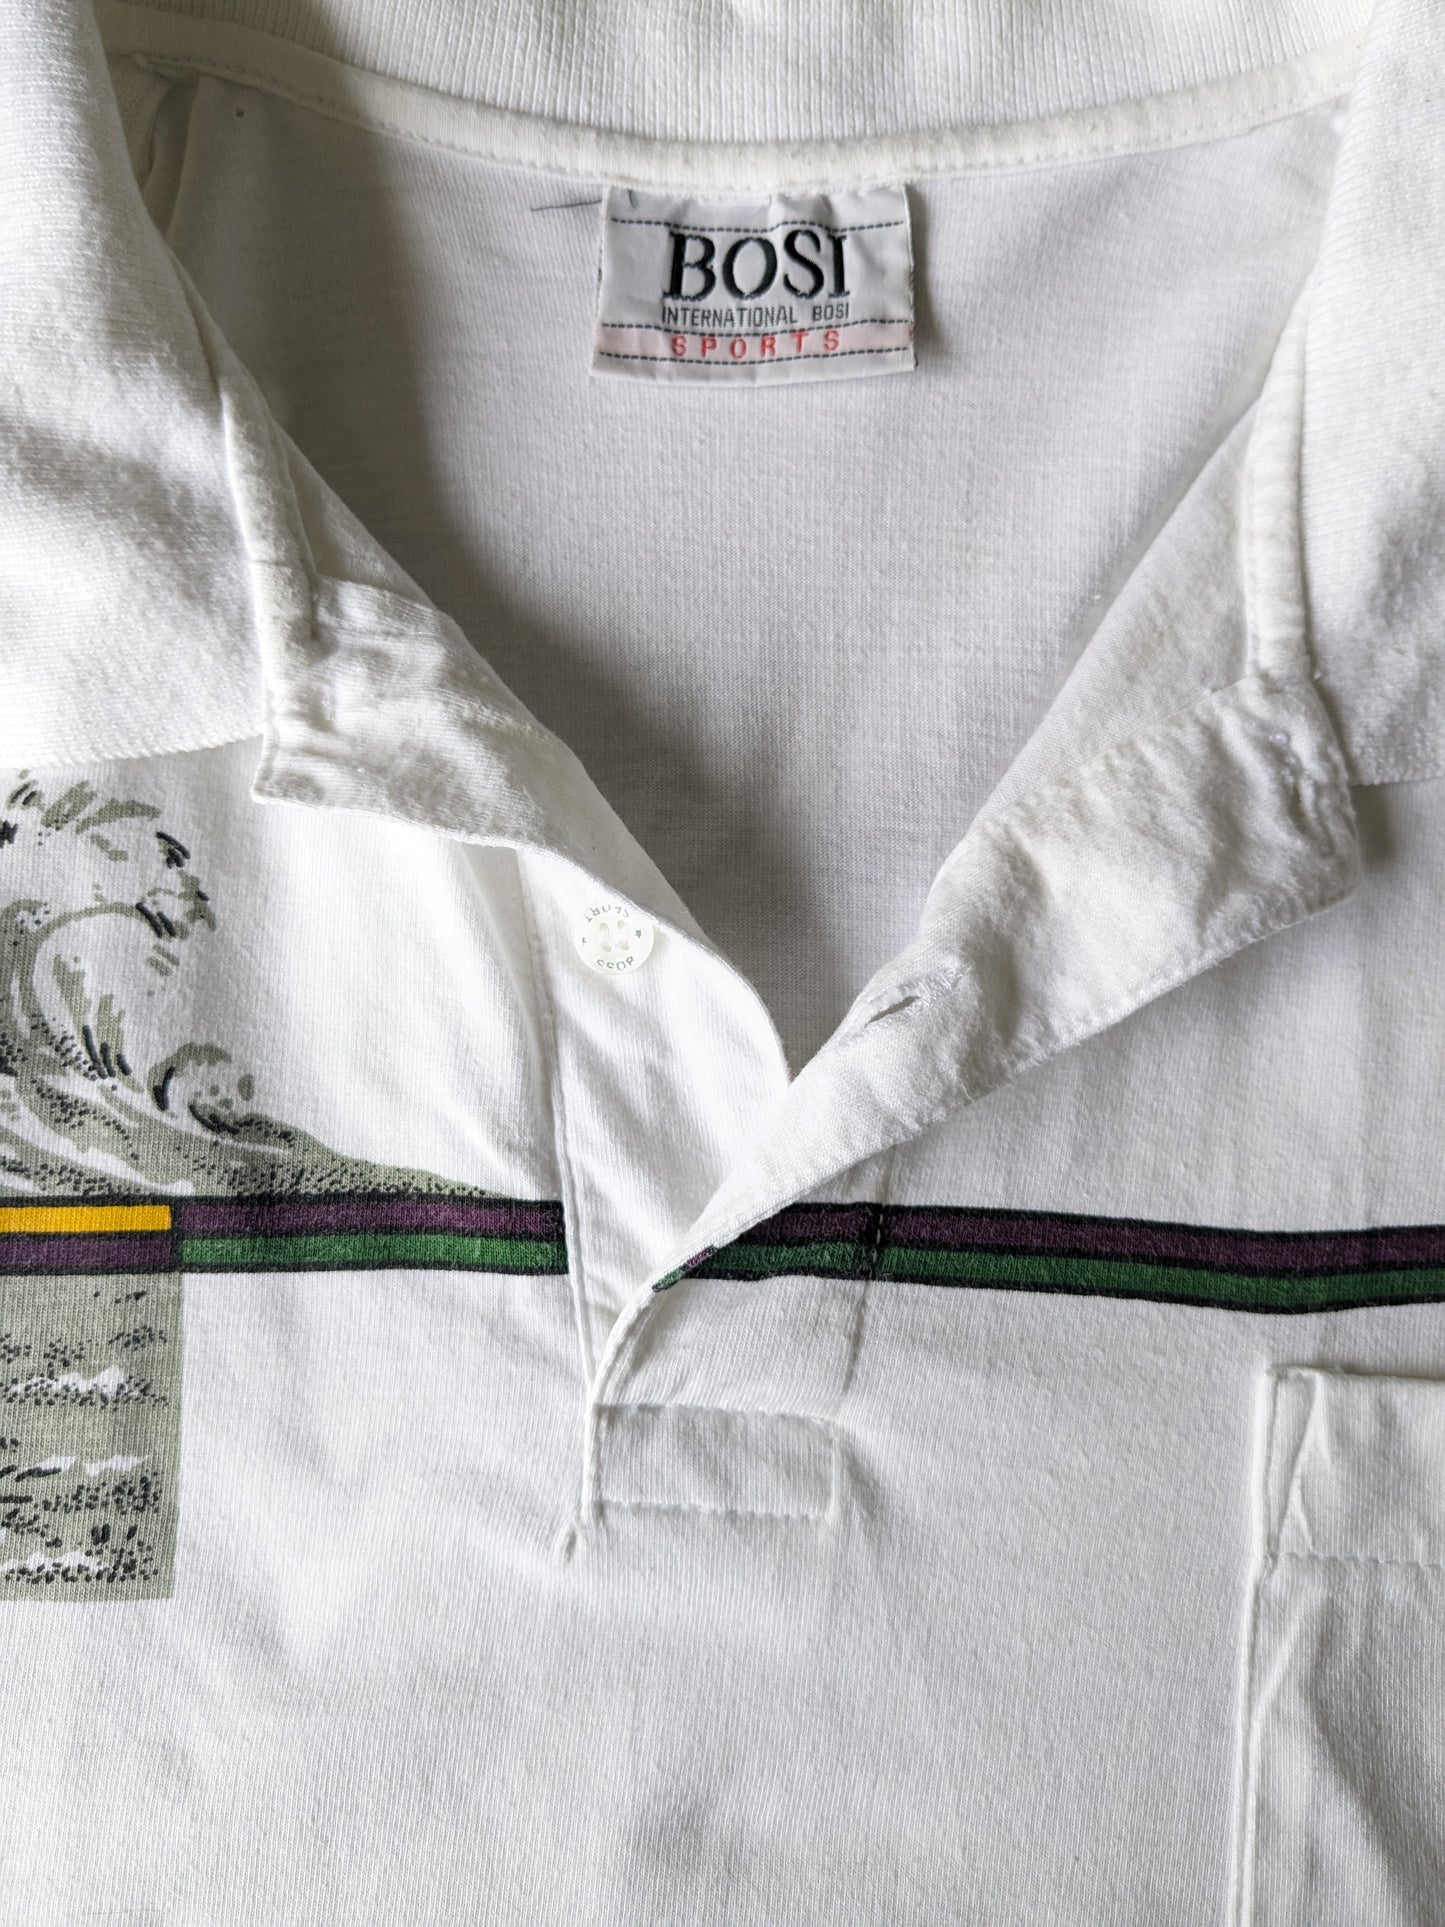 Vintage Bosi Sports Polo. "International Golfing Club". White with print. Size XL.